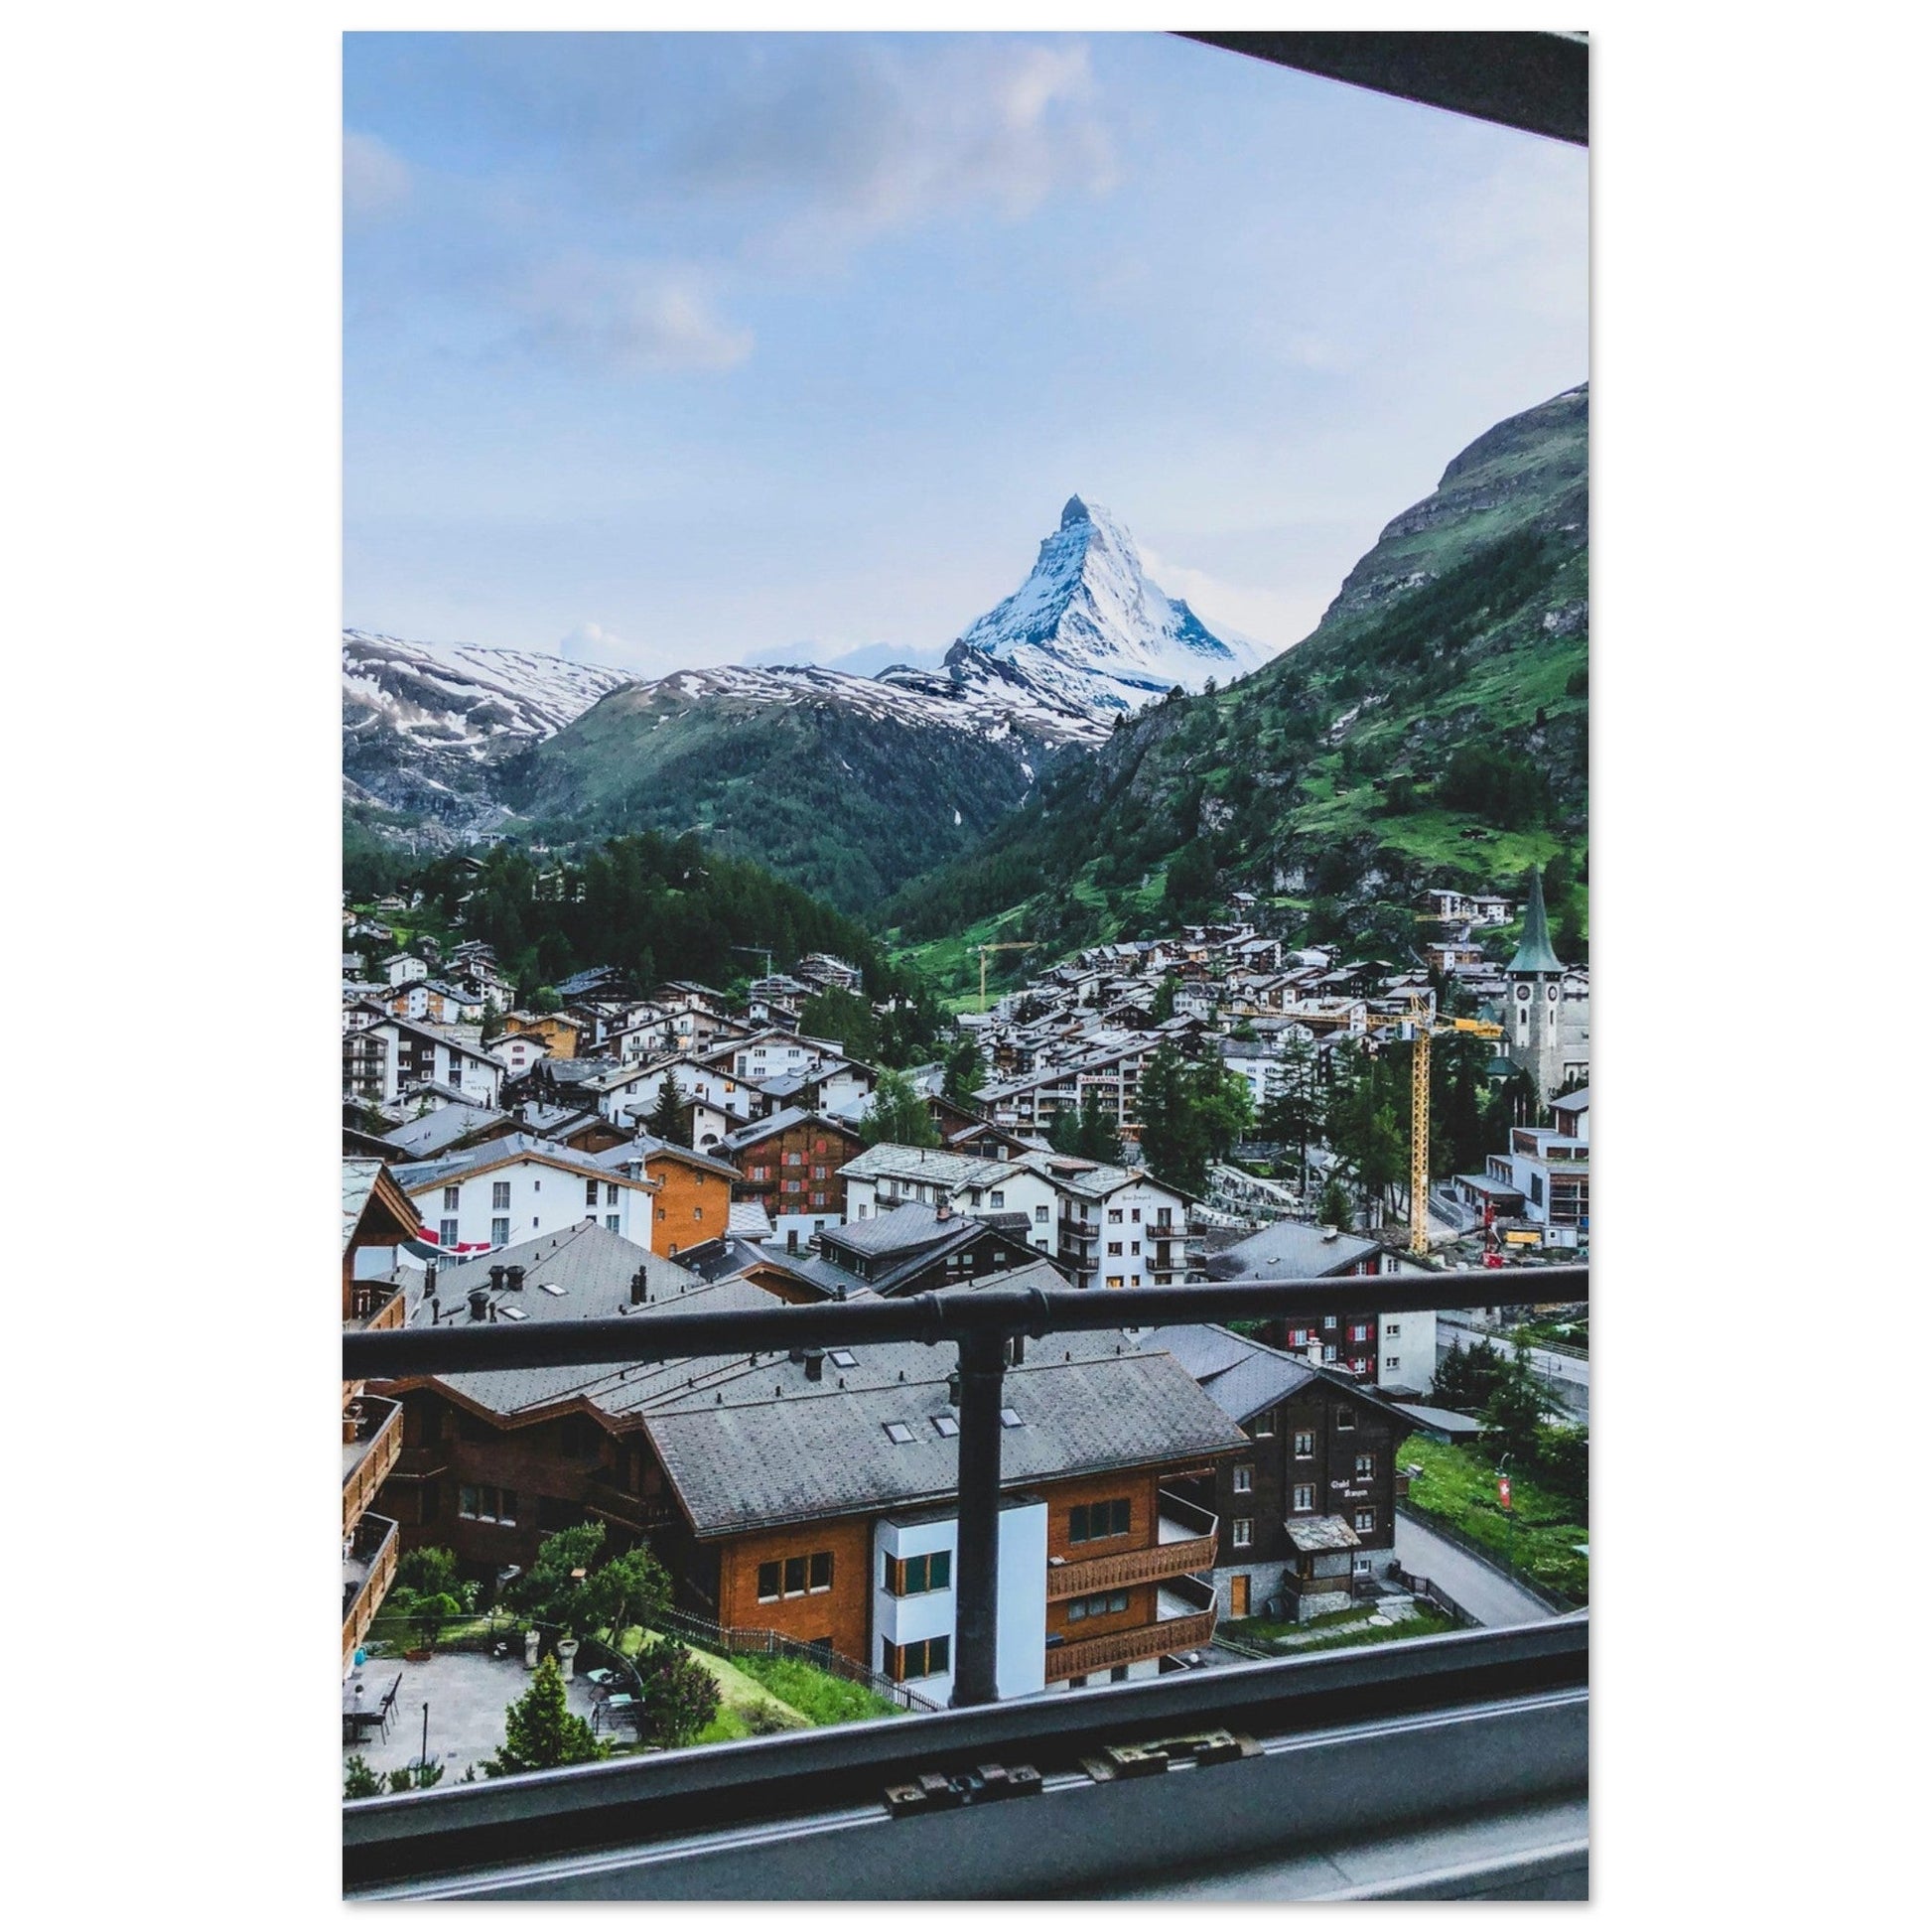 Vente Photo de Zermatt, Suisse #2 - Tableau photo alu montagne